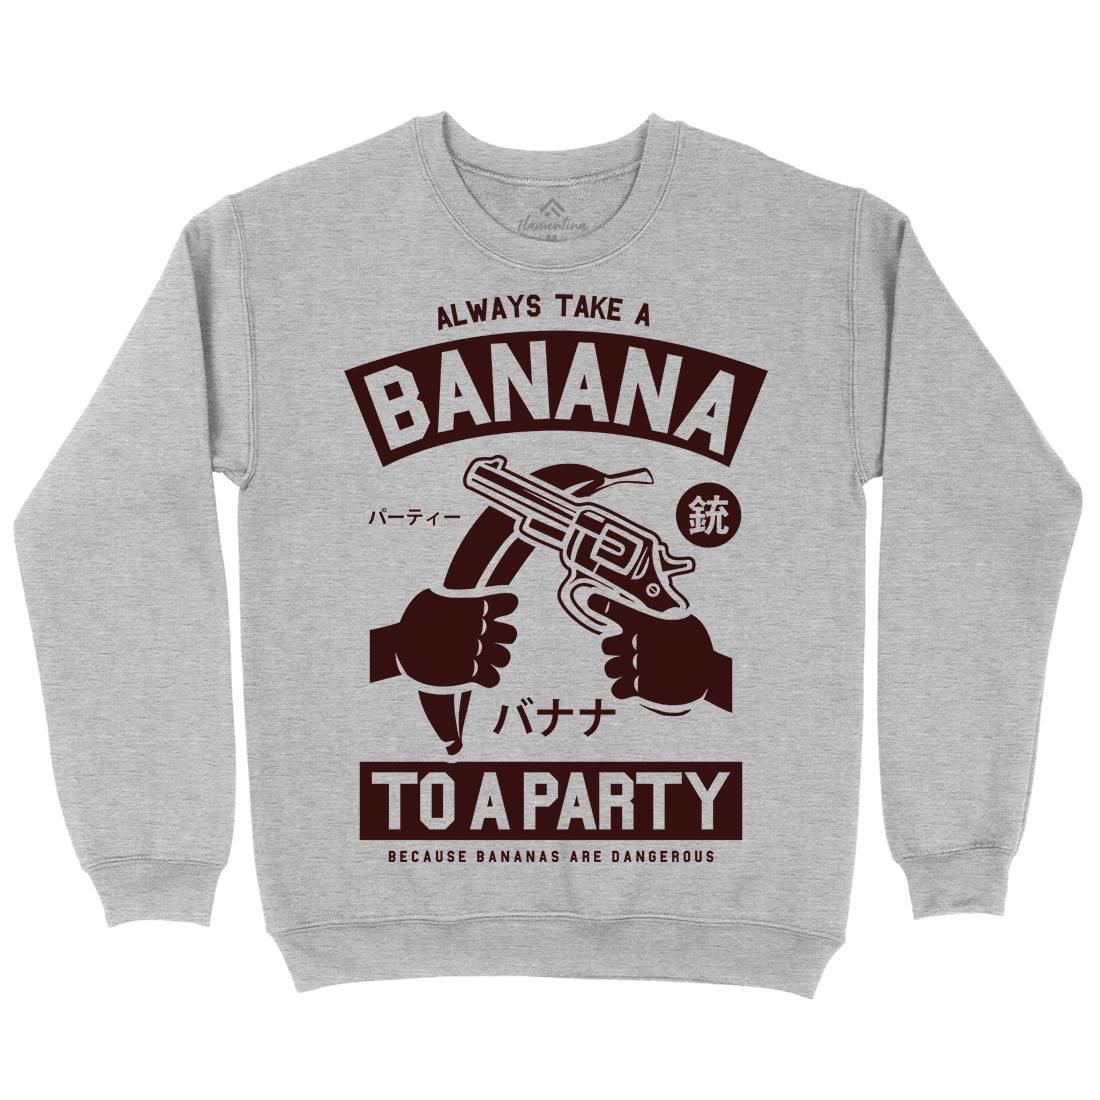 Banana Party Kids Crew Neck Sweatshirt Geek A202